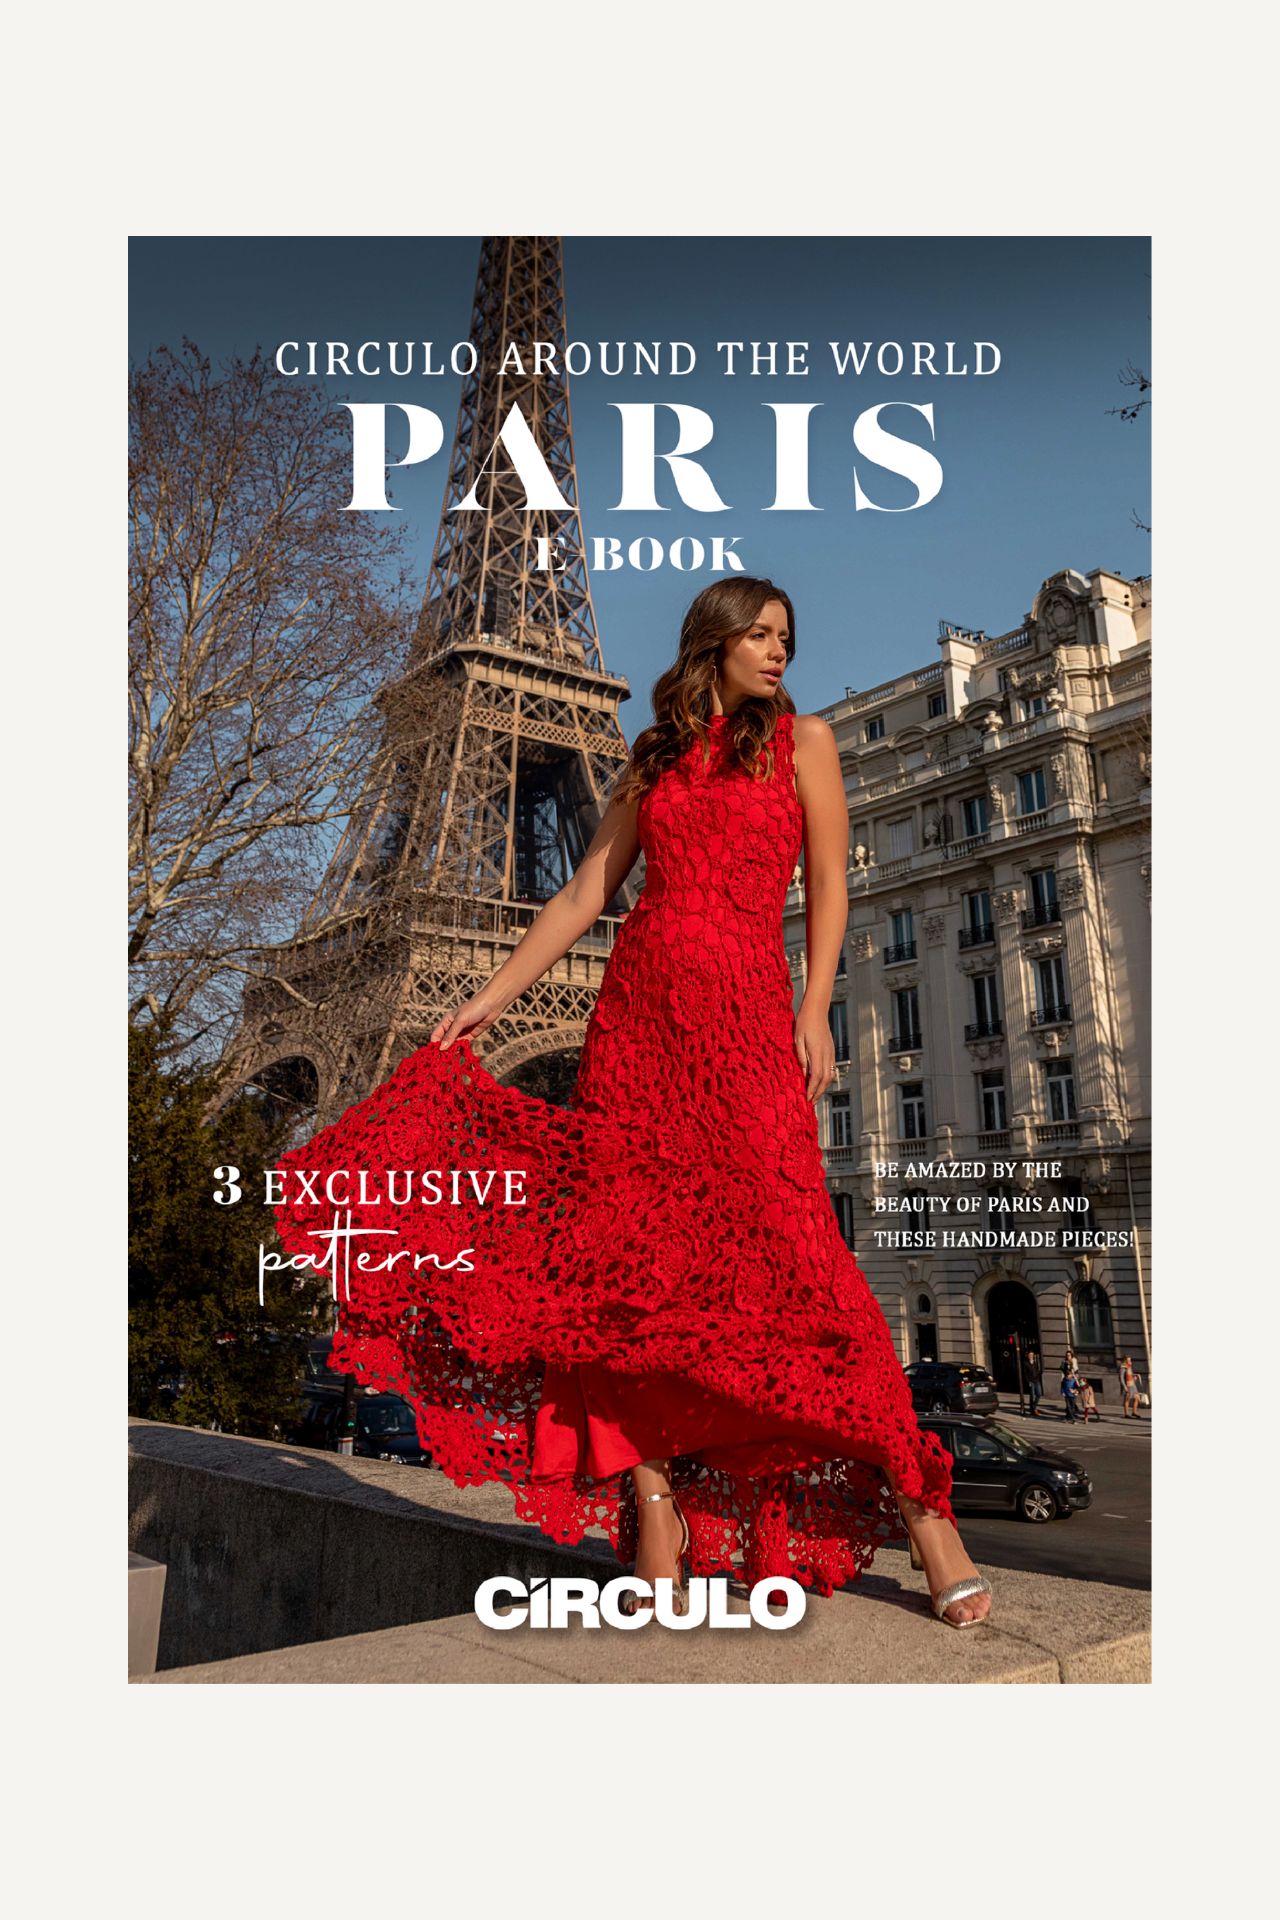 Around The World Paris Crochet Book